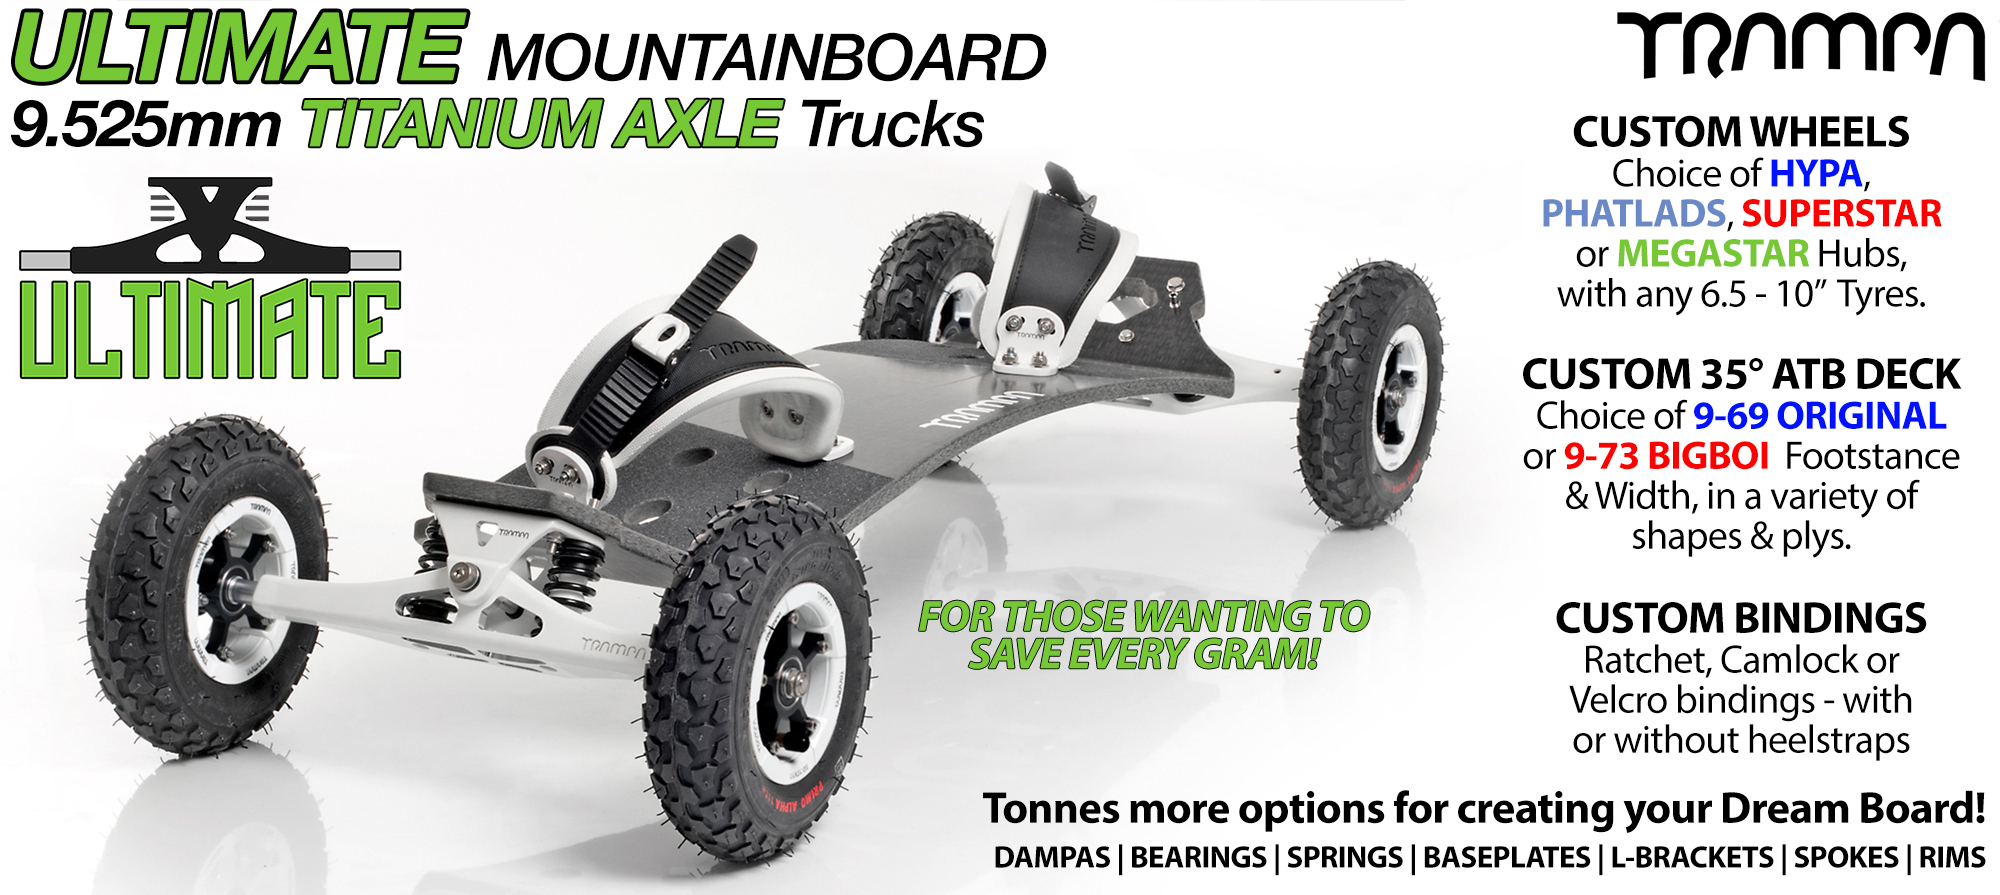 TRAMPA Mountainboard with 9.525mm TITANIUM Axle ULTIMATE Trucks RATCHET Bindings & Custom Wheels